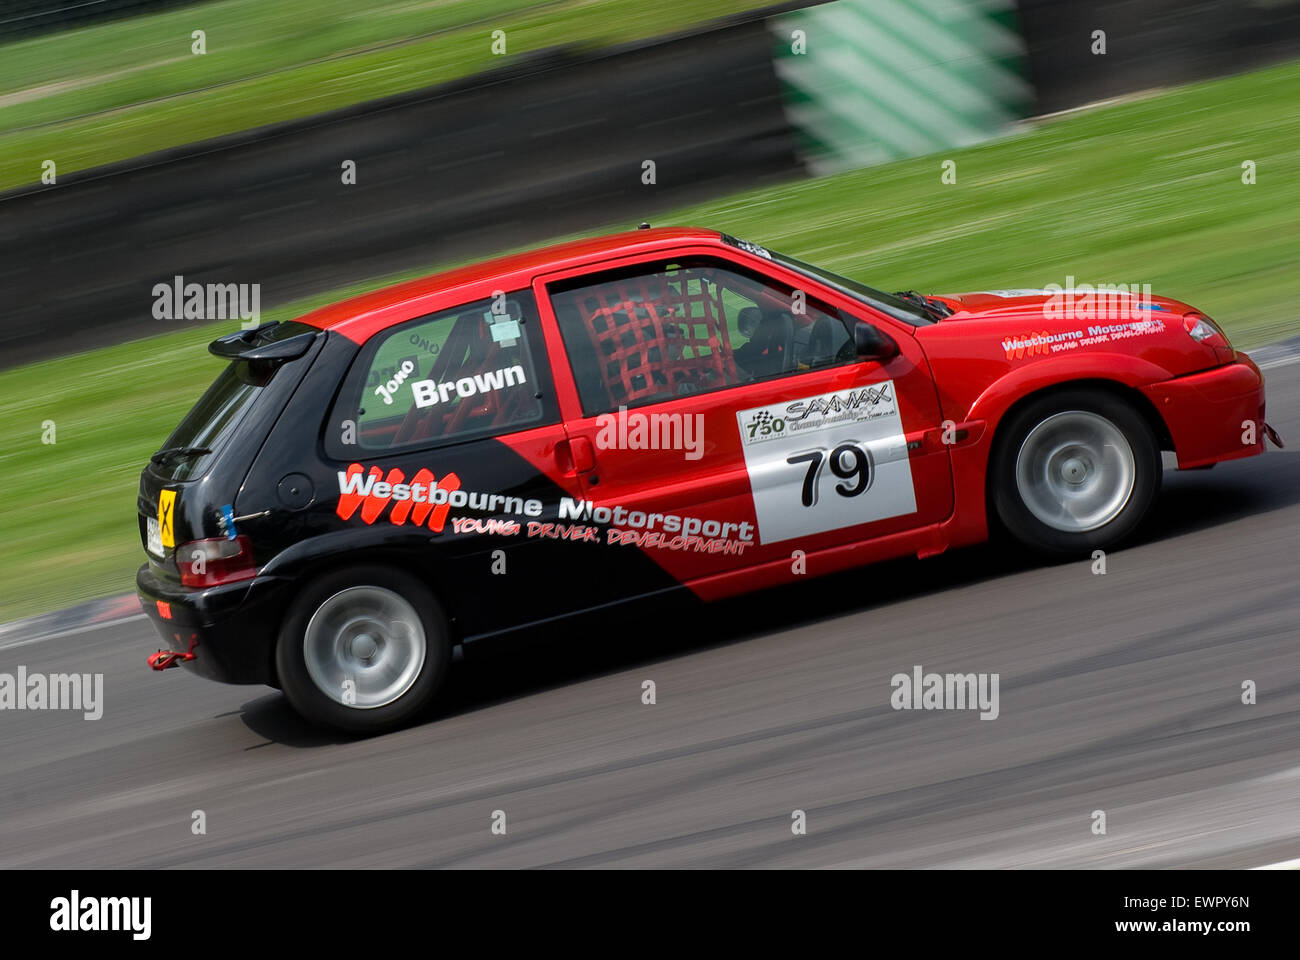 Justering Optimal Mål Black and red racing car Stock Photo - Alamy